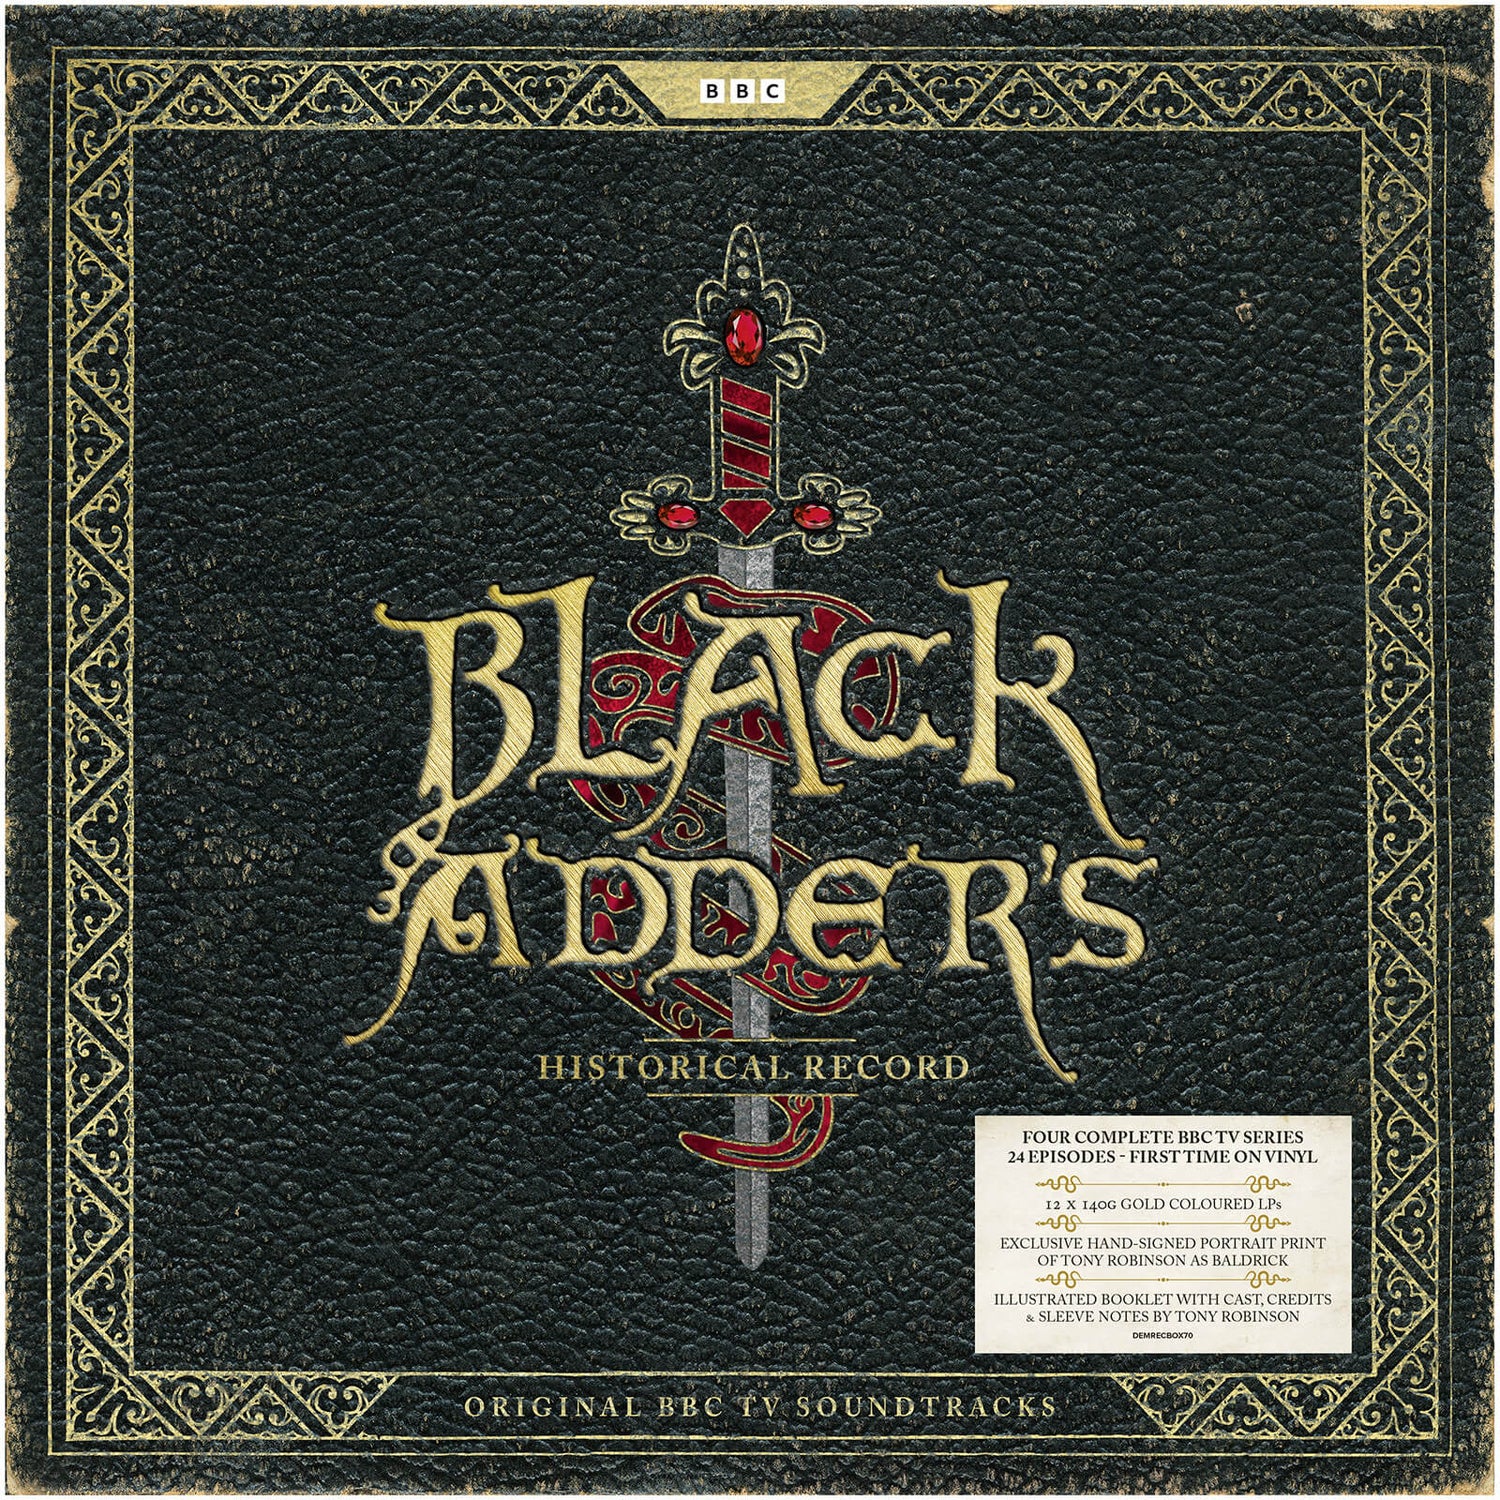 Blackadder's Historical Record - 40th Anniversary (140g Gold Vinyl) Signed Limited Edition Box Set